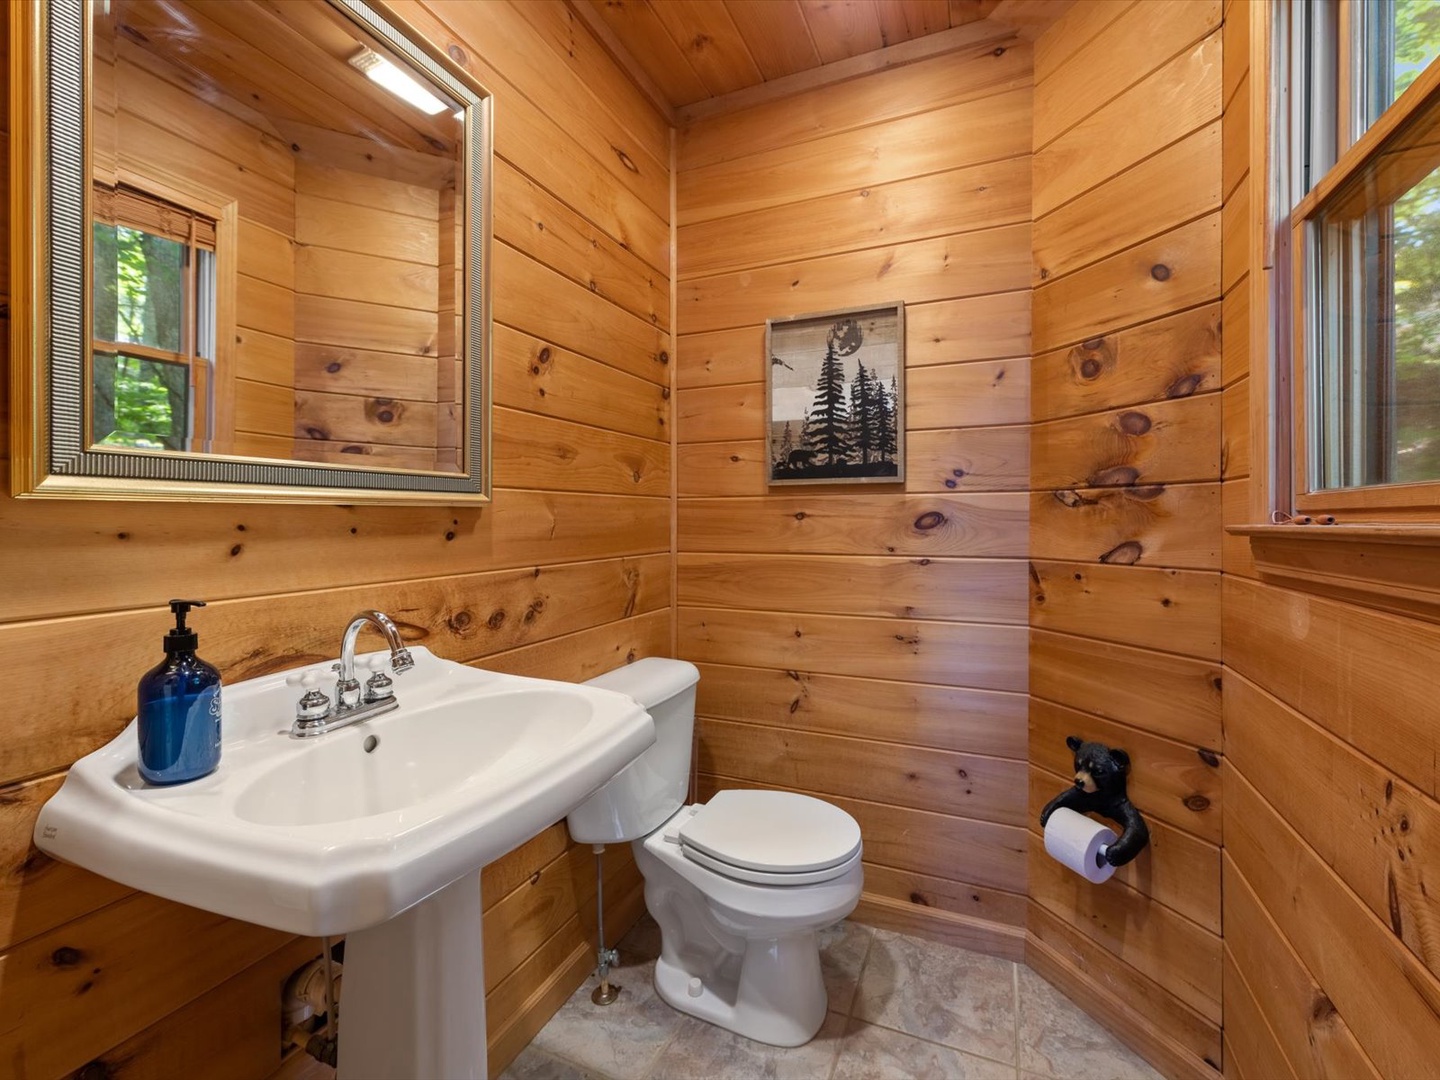 Bear Necessities- Entry level shared bathroom area